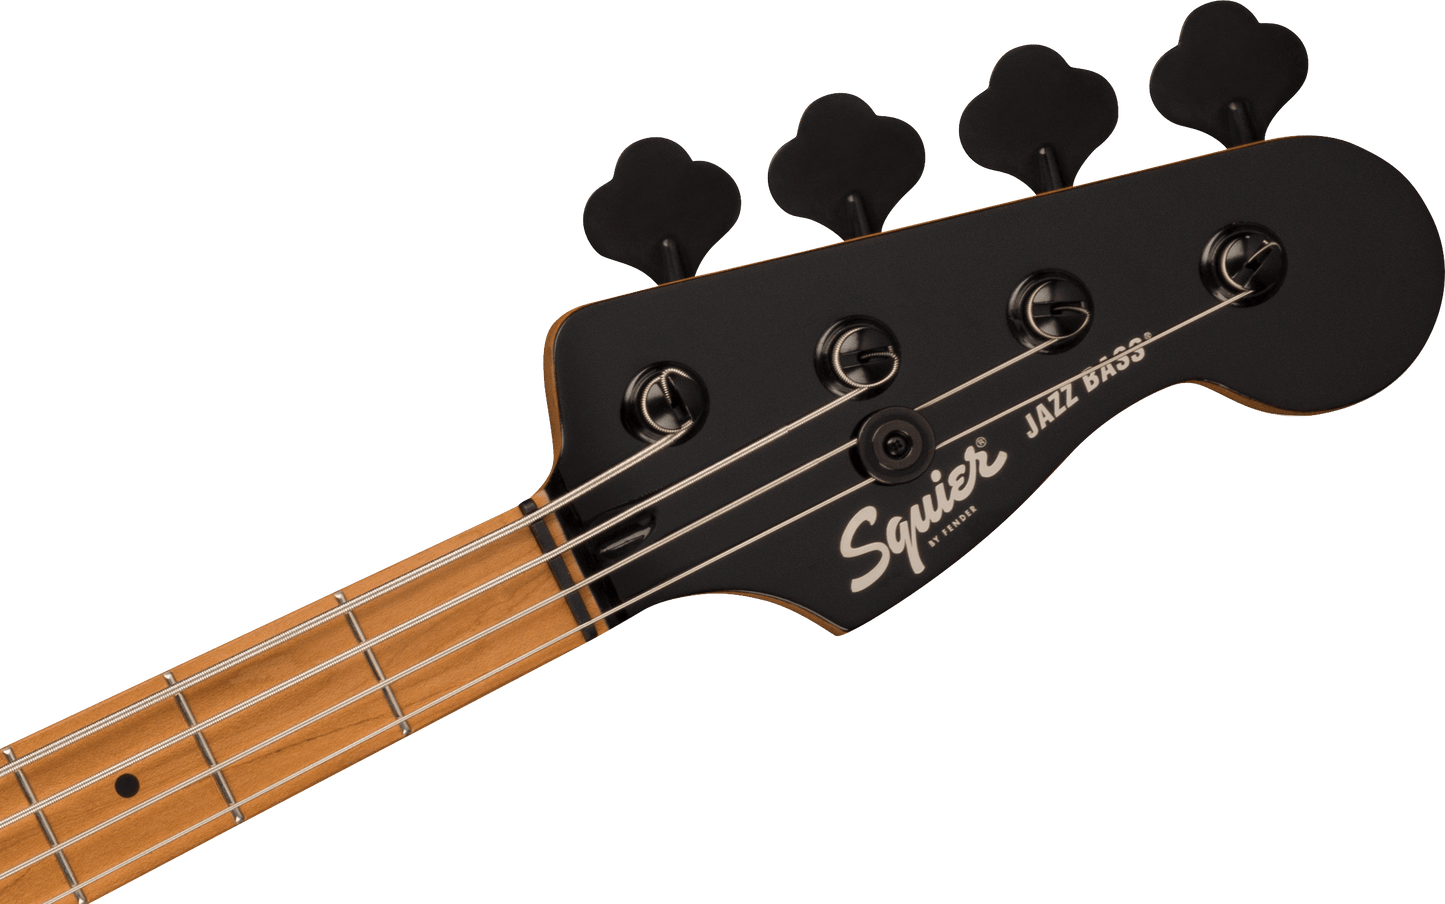 Squier Contemporary Active Jazz Bass HH - Roasted Maple Neck - Shoreline Gold